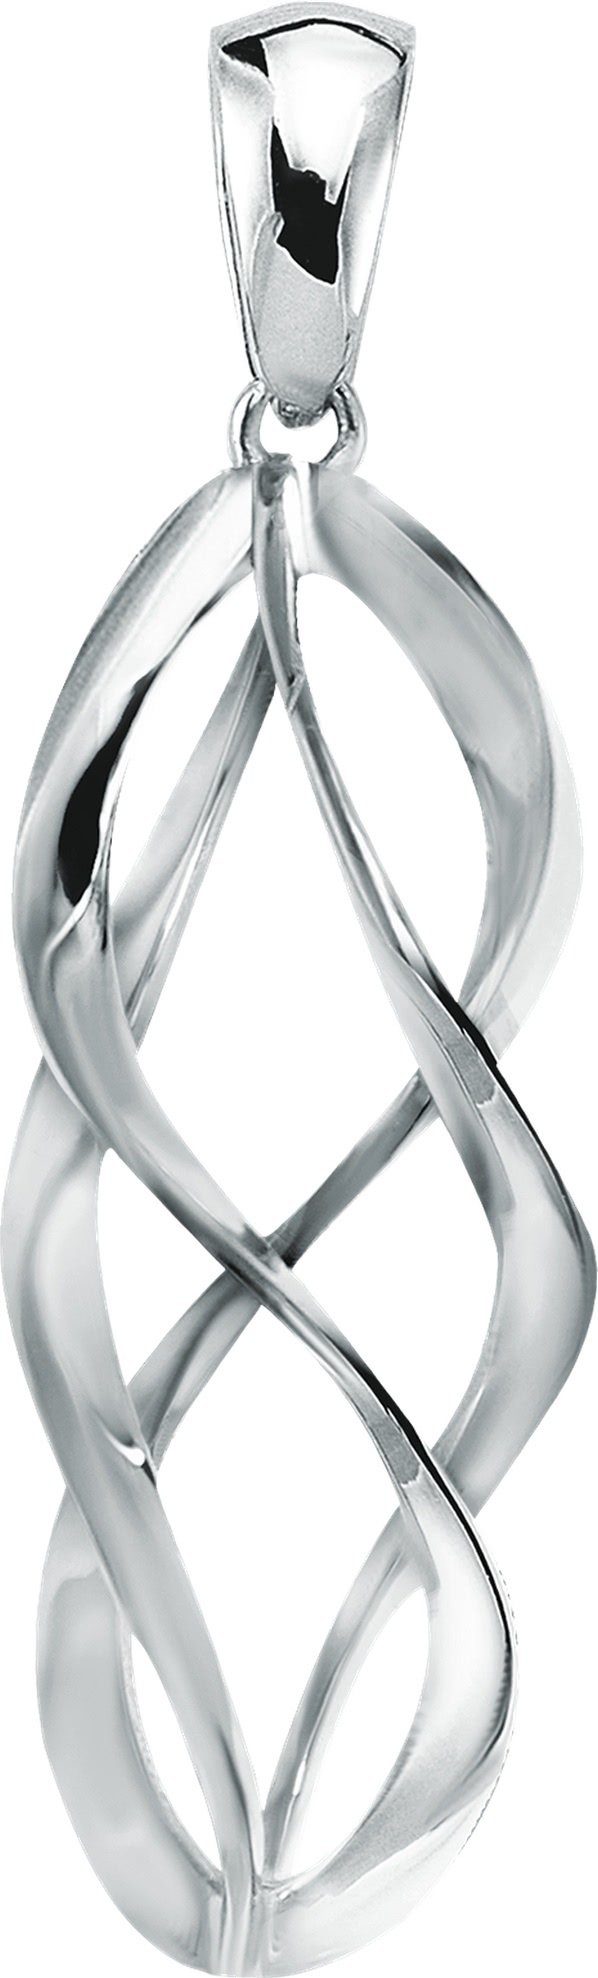 Balia Kettenanhänger Balia Kettenanhänger für Damen 925 Silber, Kettenanhänger ca. 3,8cm, 925 Sterling Silber (Spirale)